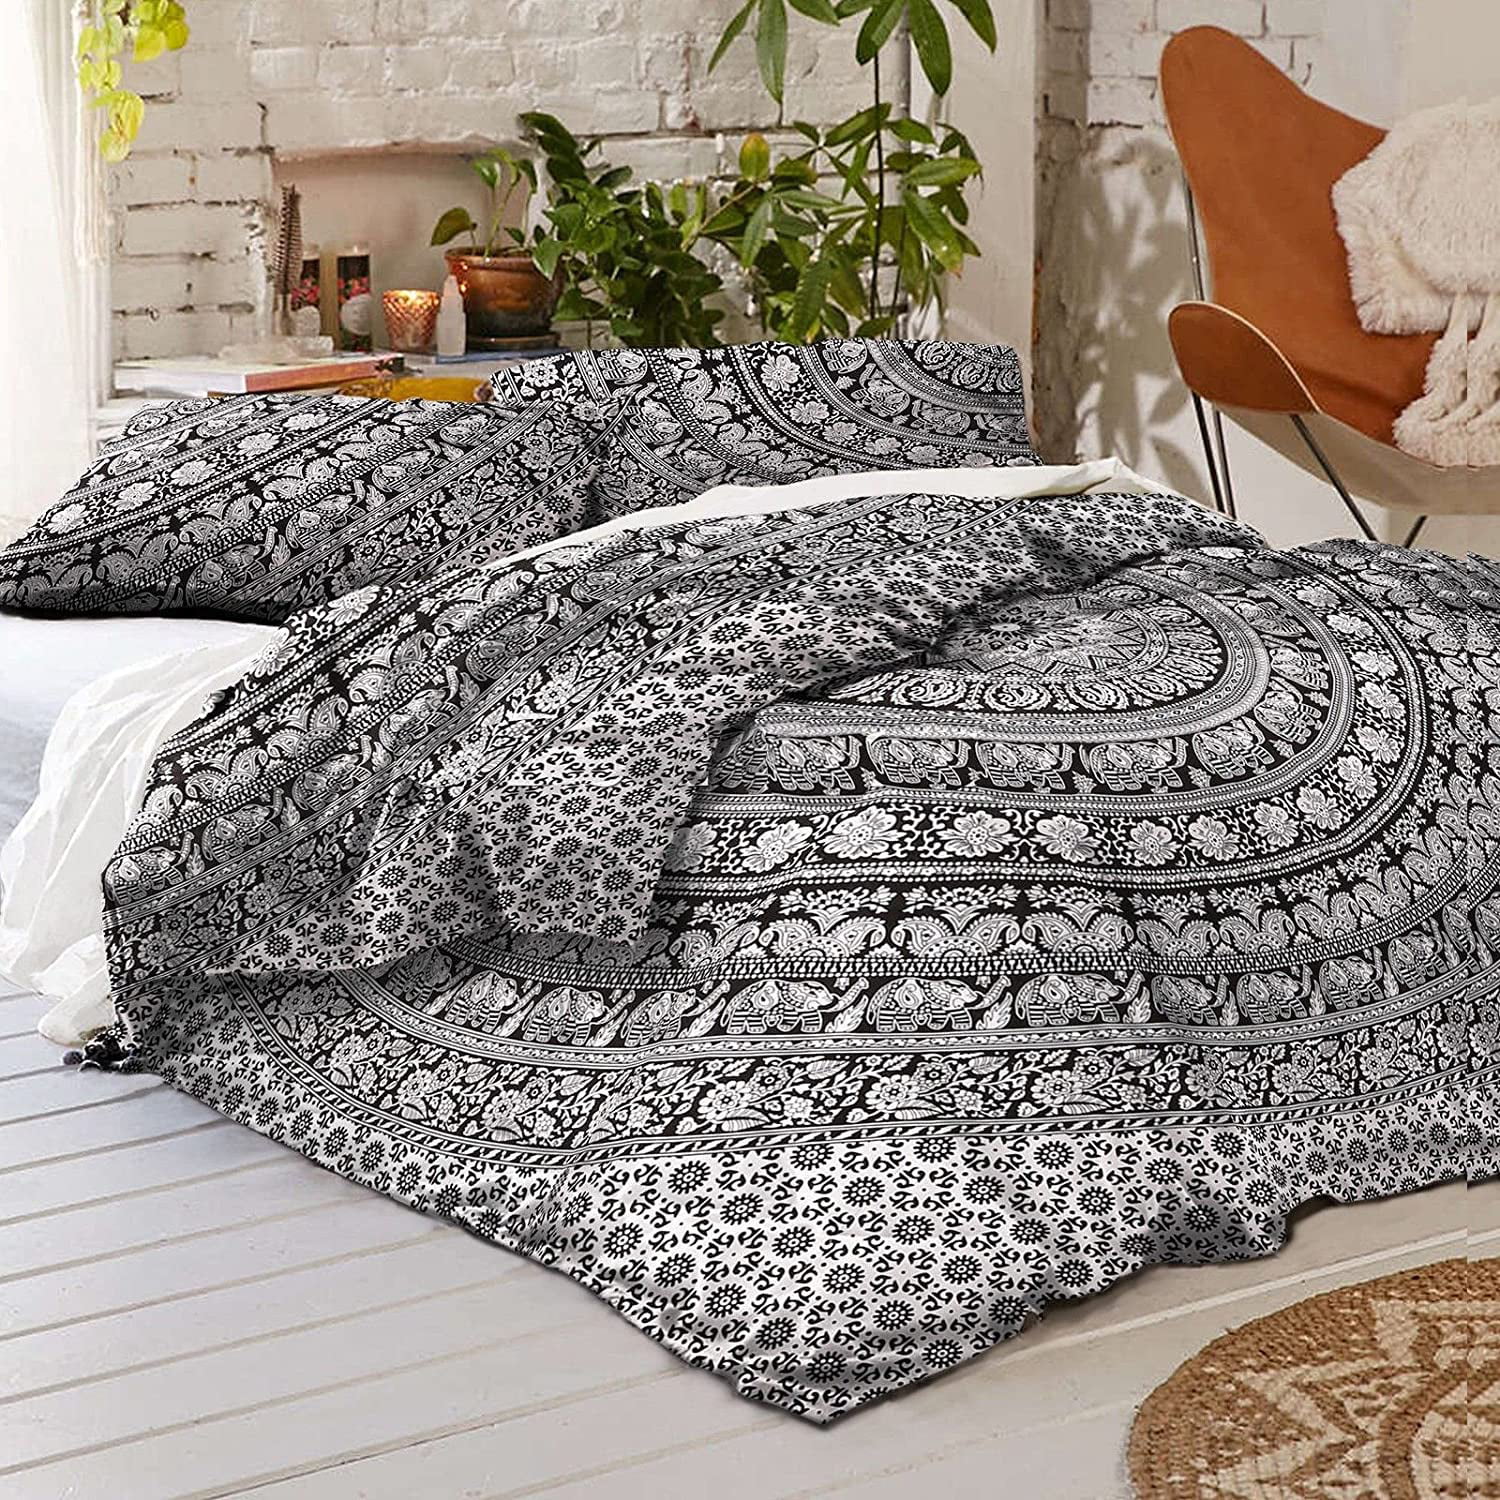 Hippie Bohemian Indian Mandala Bedding Bedspread Bed Cover  Queen Size Blanket